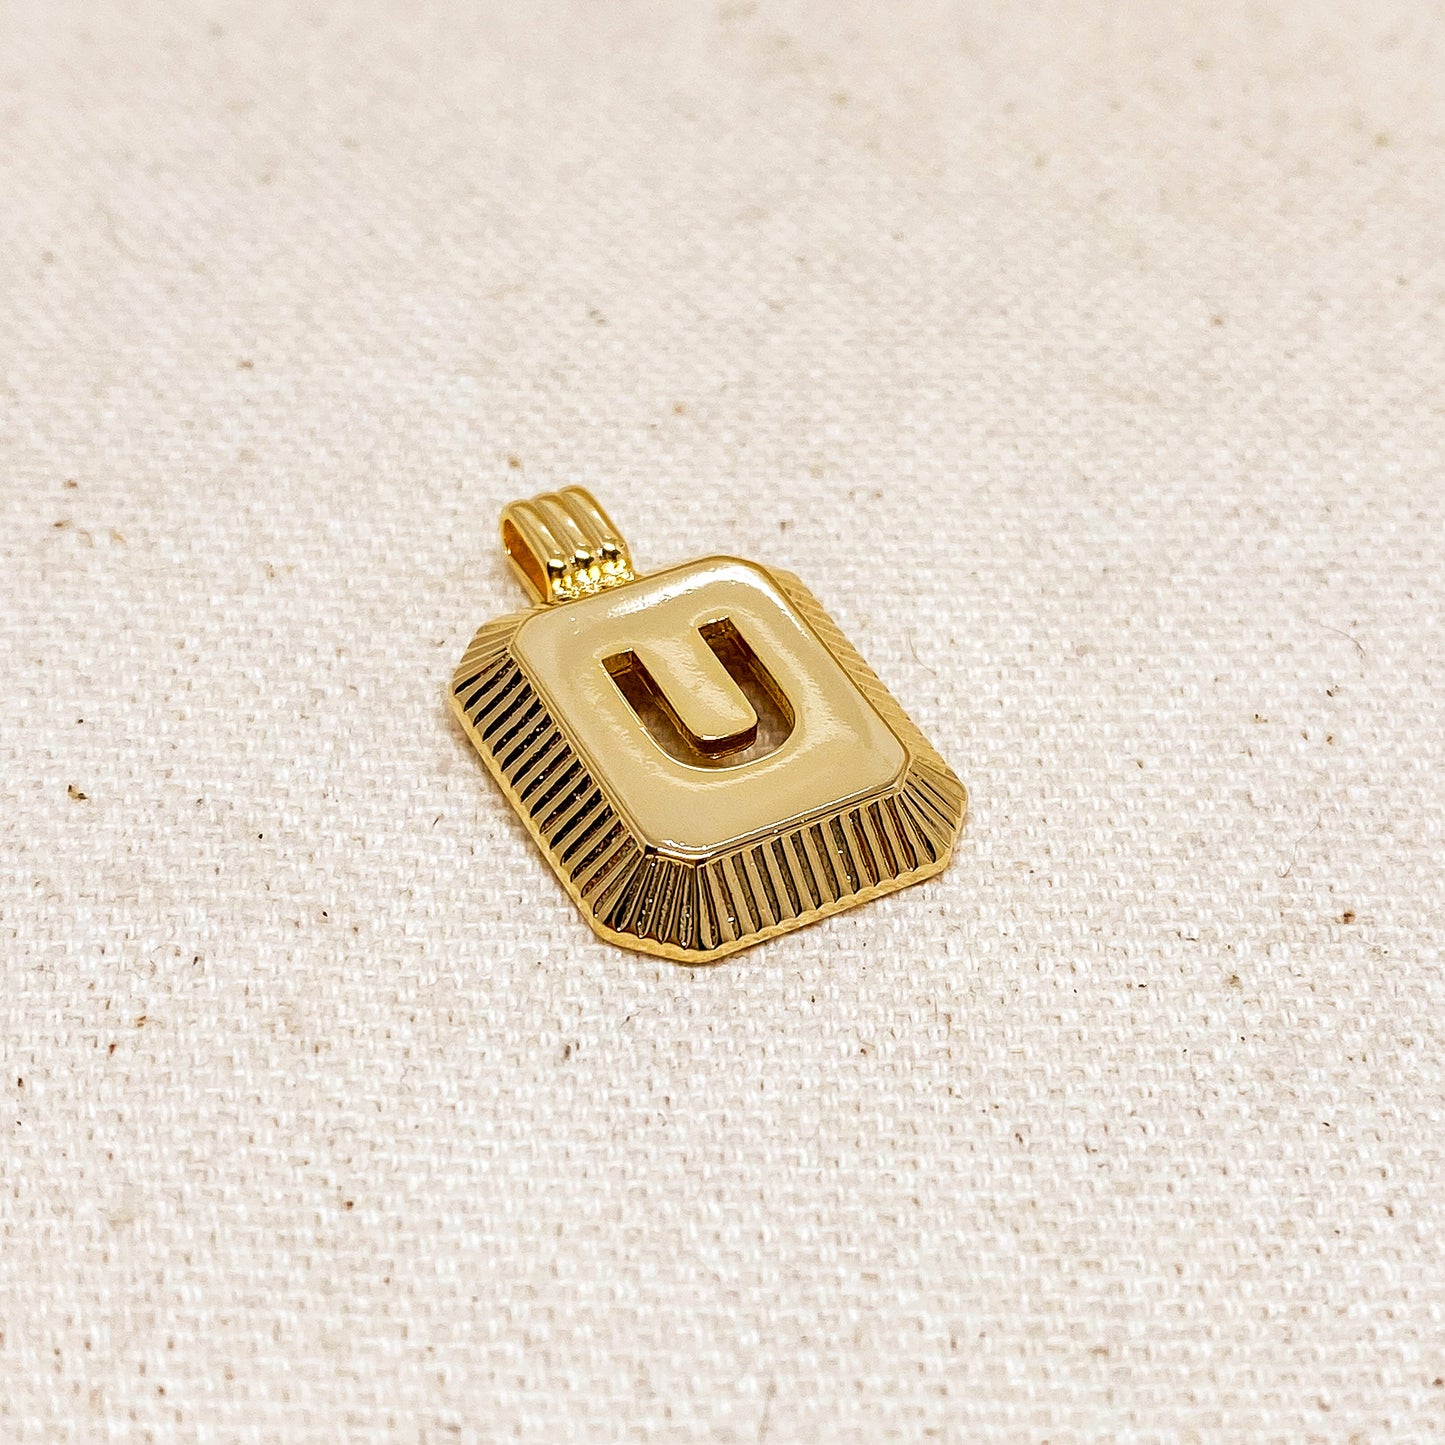 18k Gold Filled Initial Letter Pendant